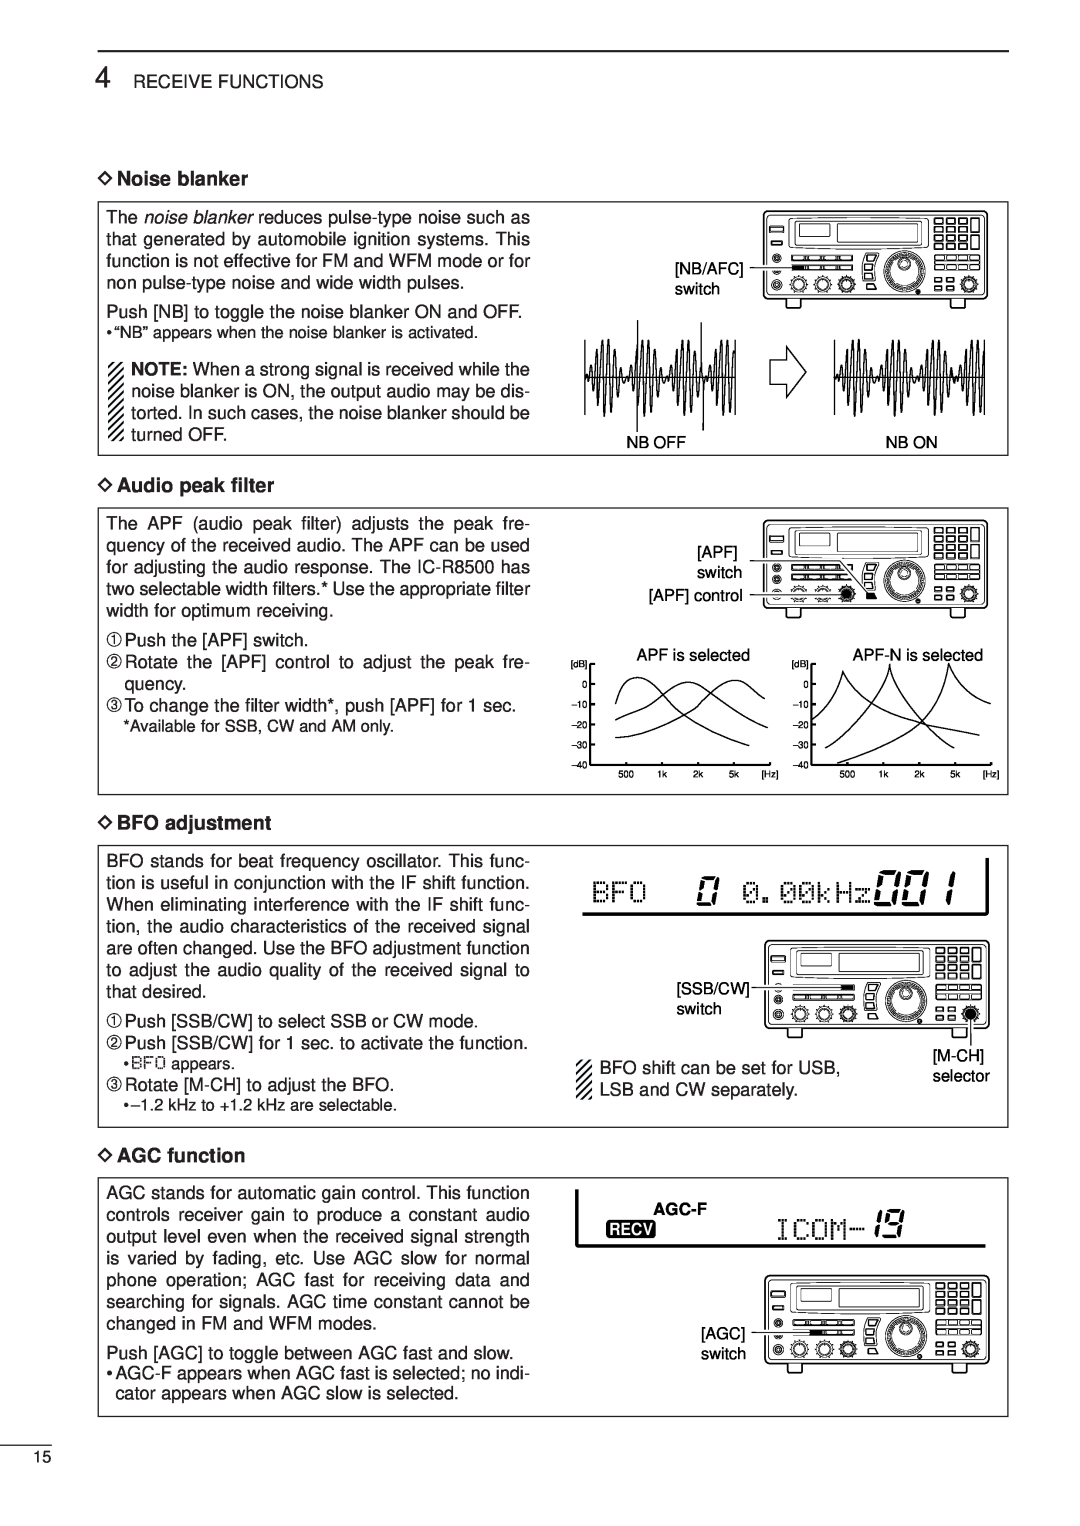 Icom IC-R8500 instruction manual D Noise blanker, D Audio peak ﬁlter, D BFO adjustment, DAGC function, 0.00kHz, Icom 